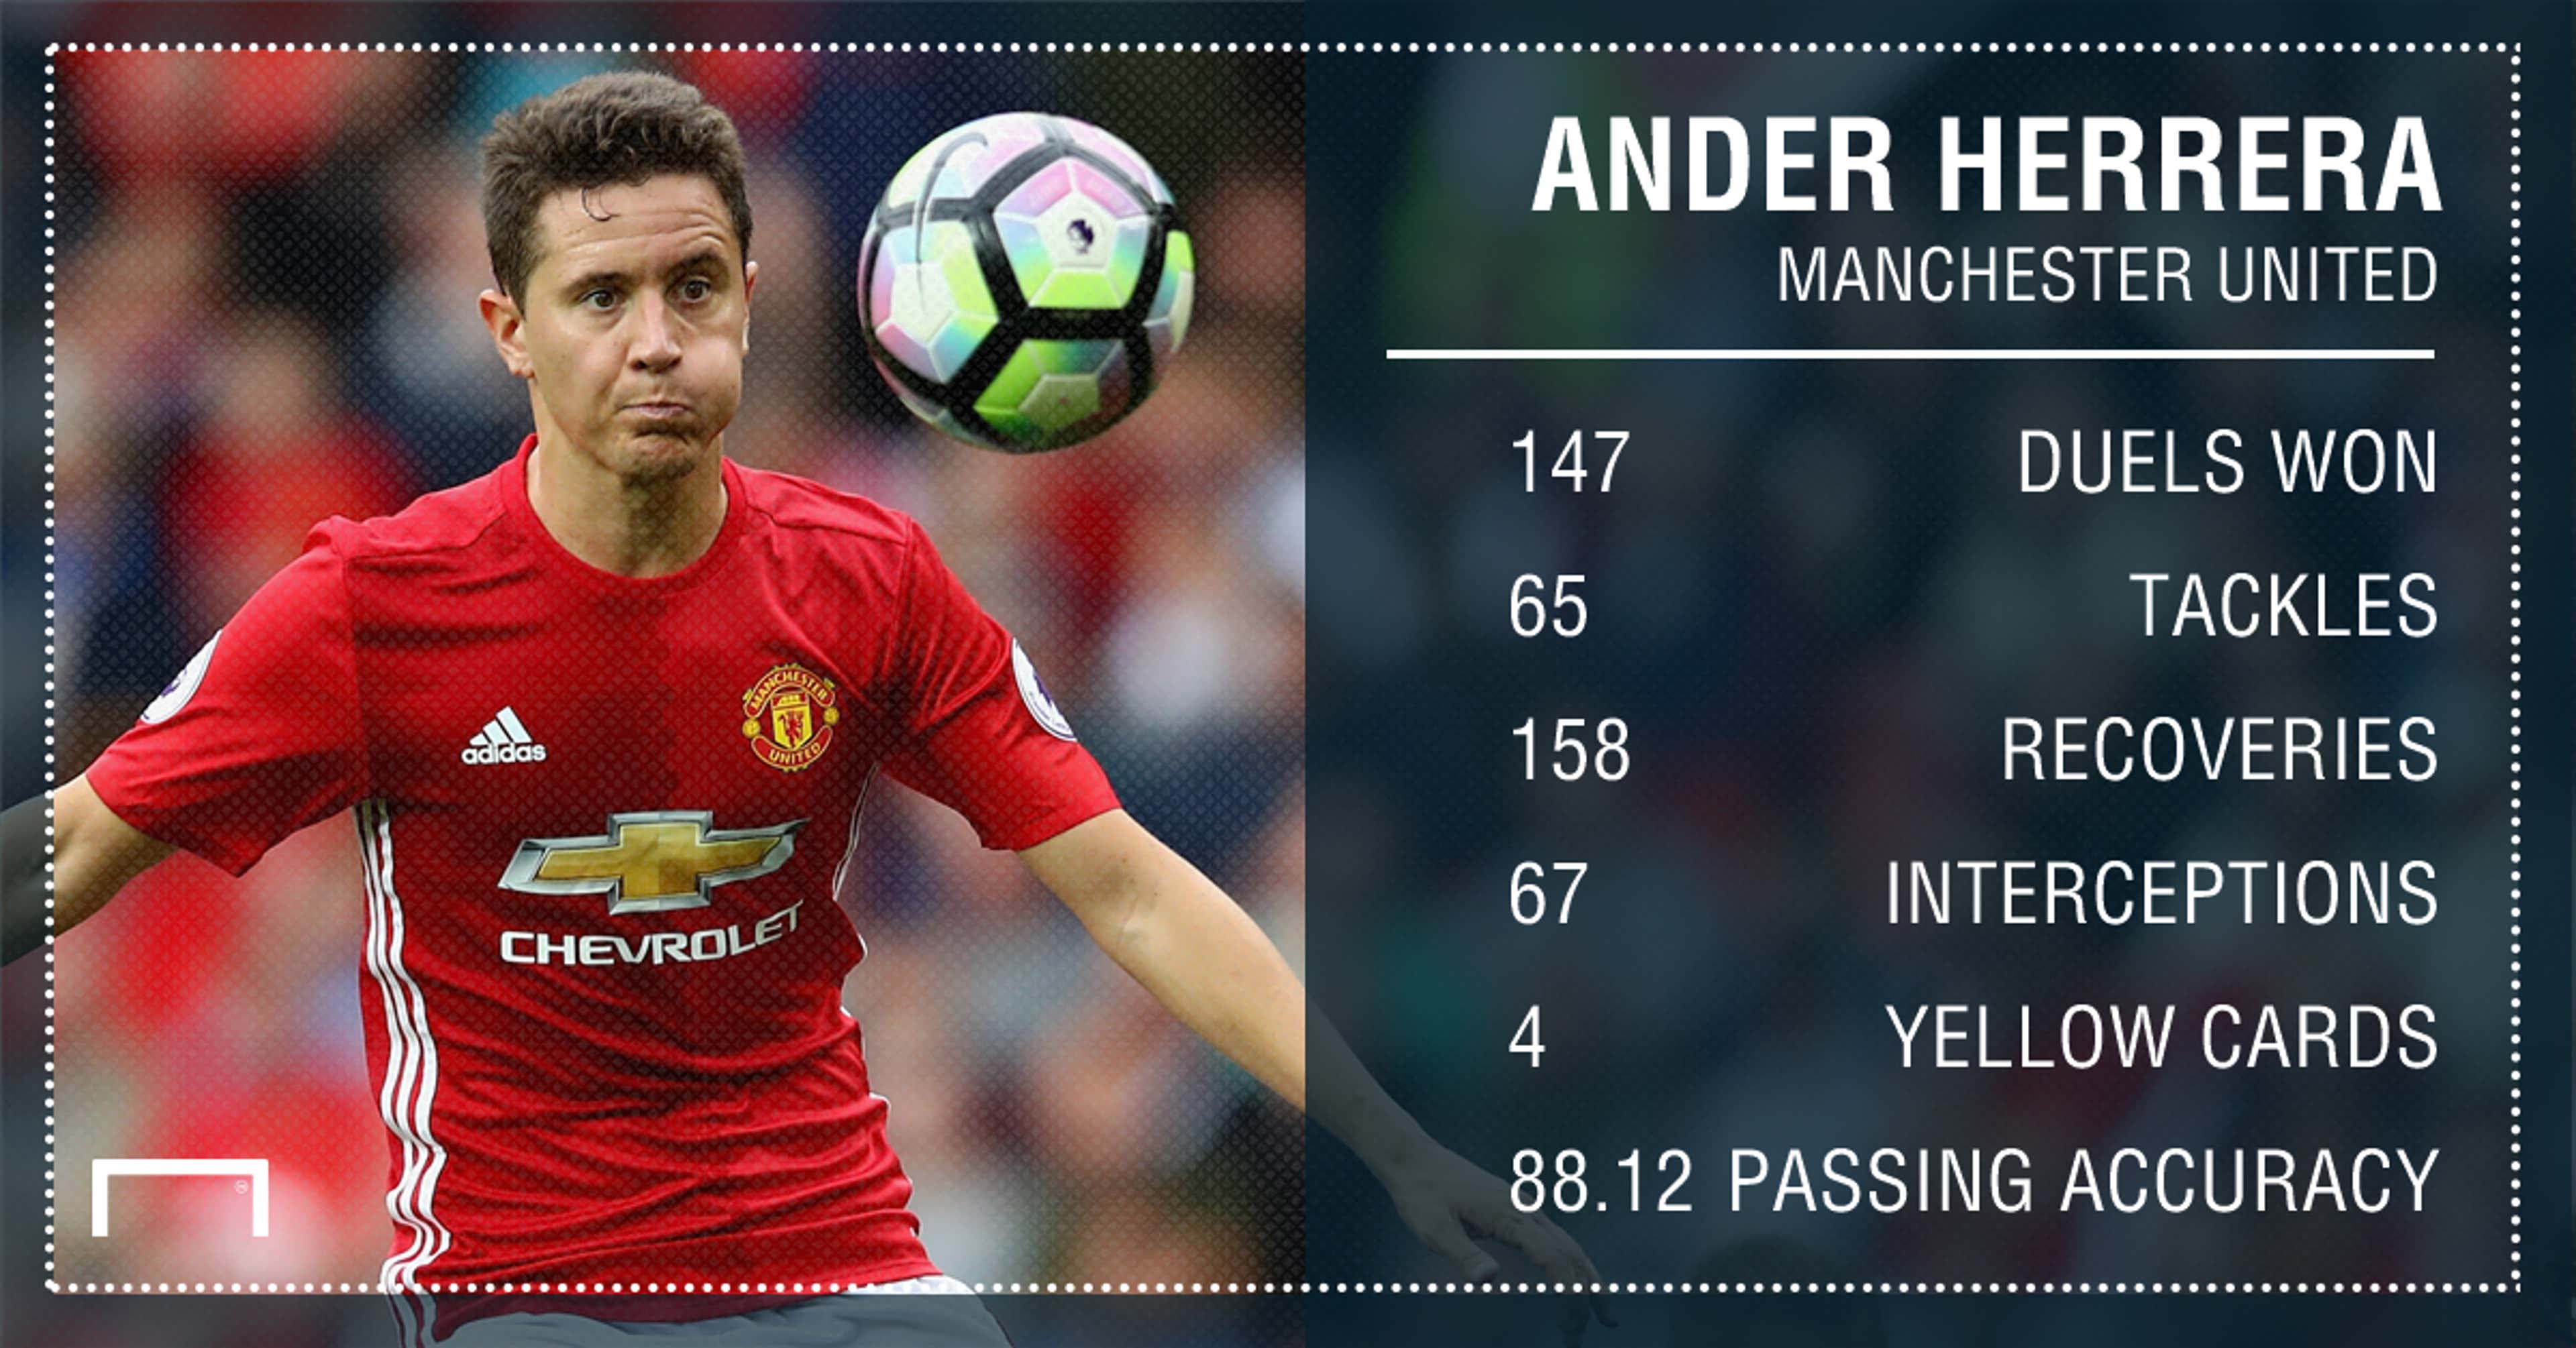 Ander Herrera Manchester United stats